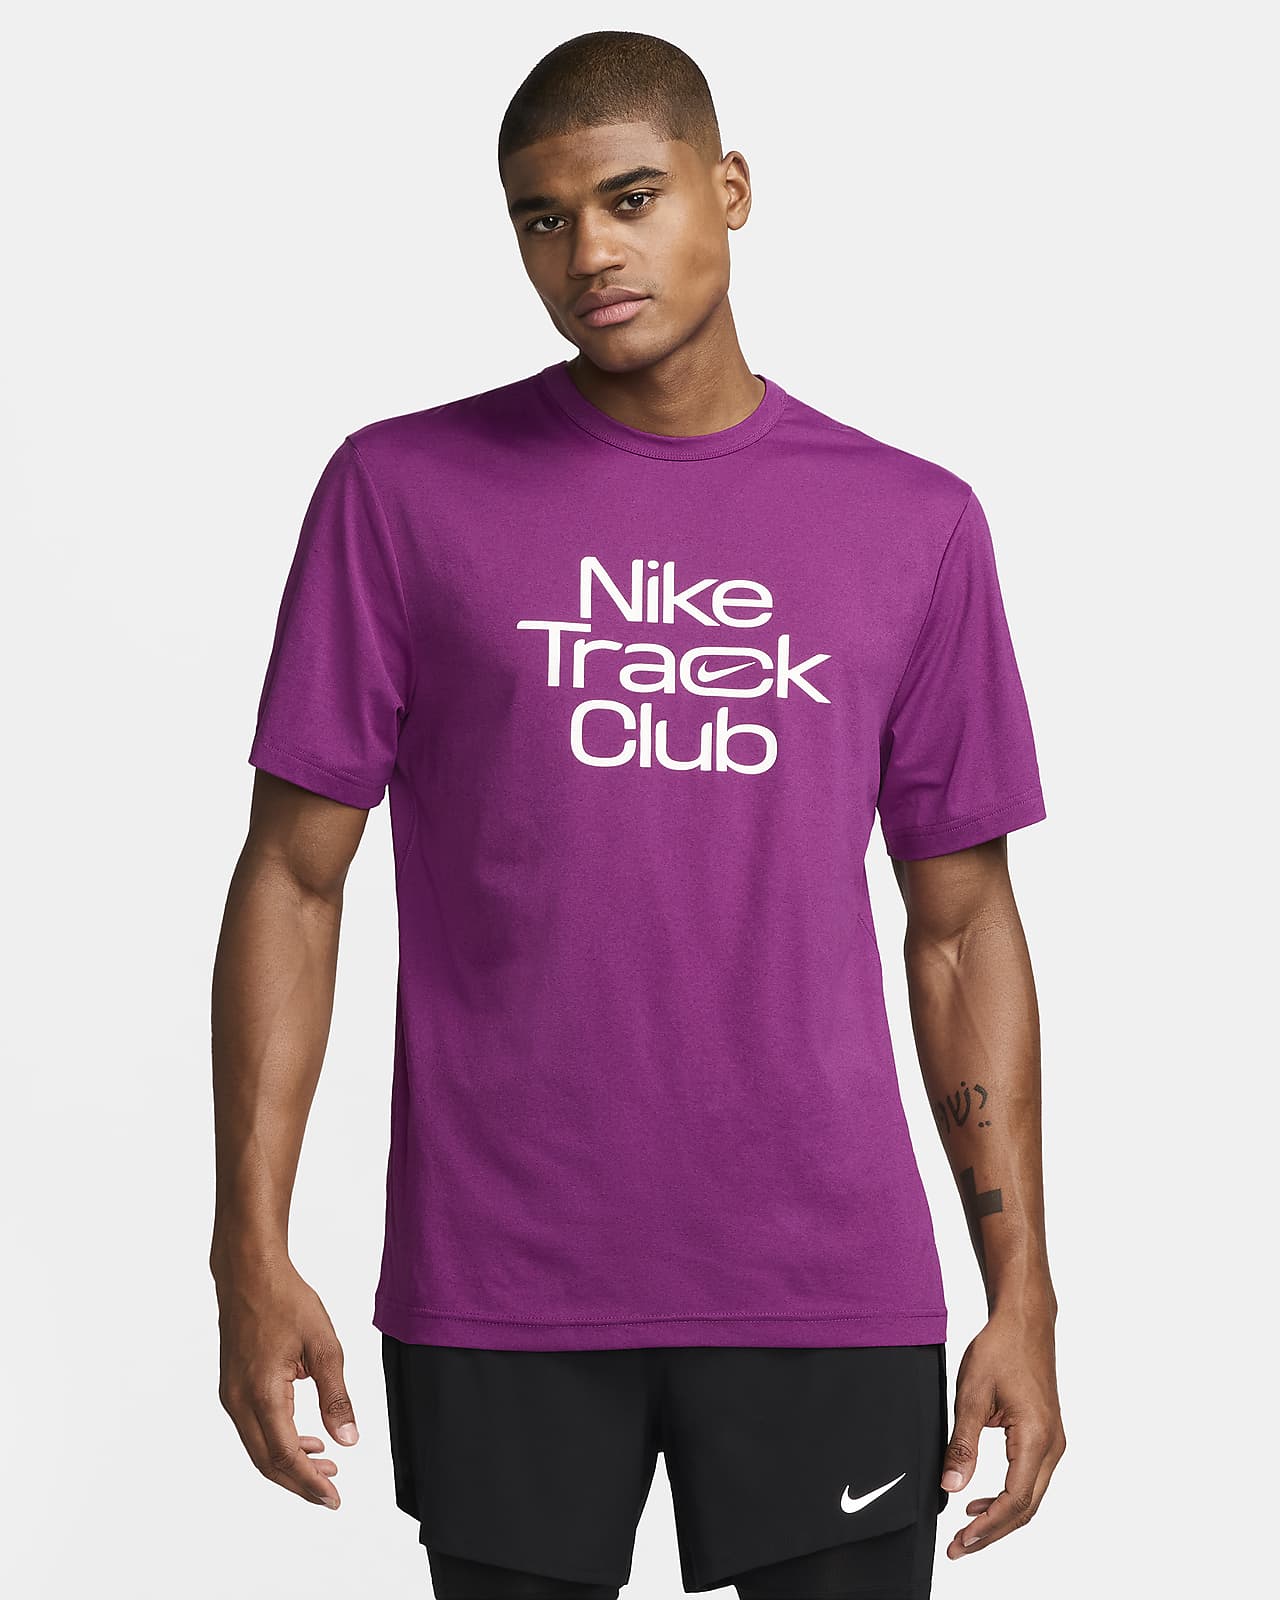 Nike Track Club Samarreta de màniga curta Dri-FIT de running - Home